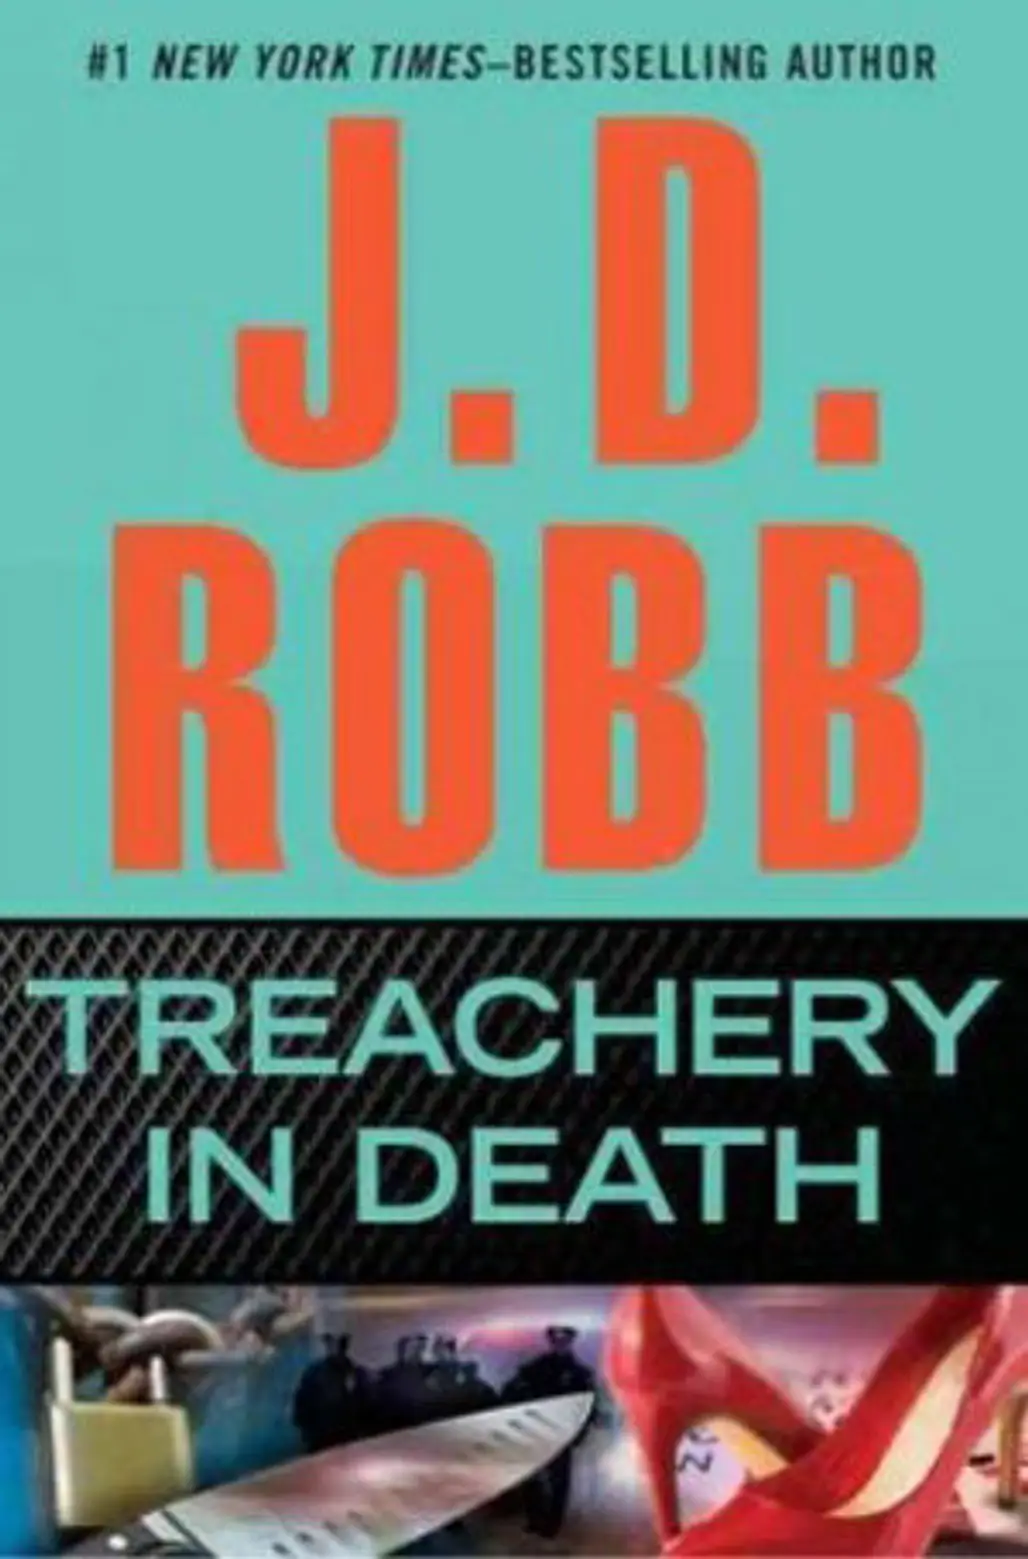 Treachery in Death by J.D. Robb/Nora Roberts